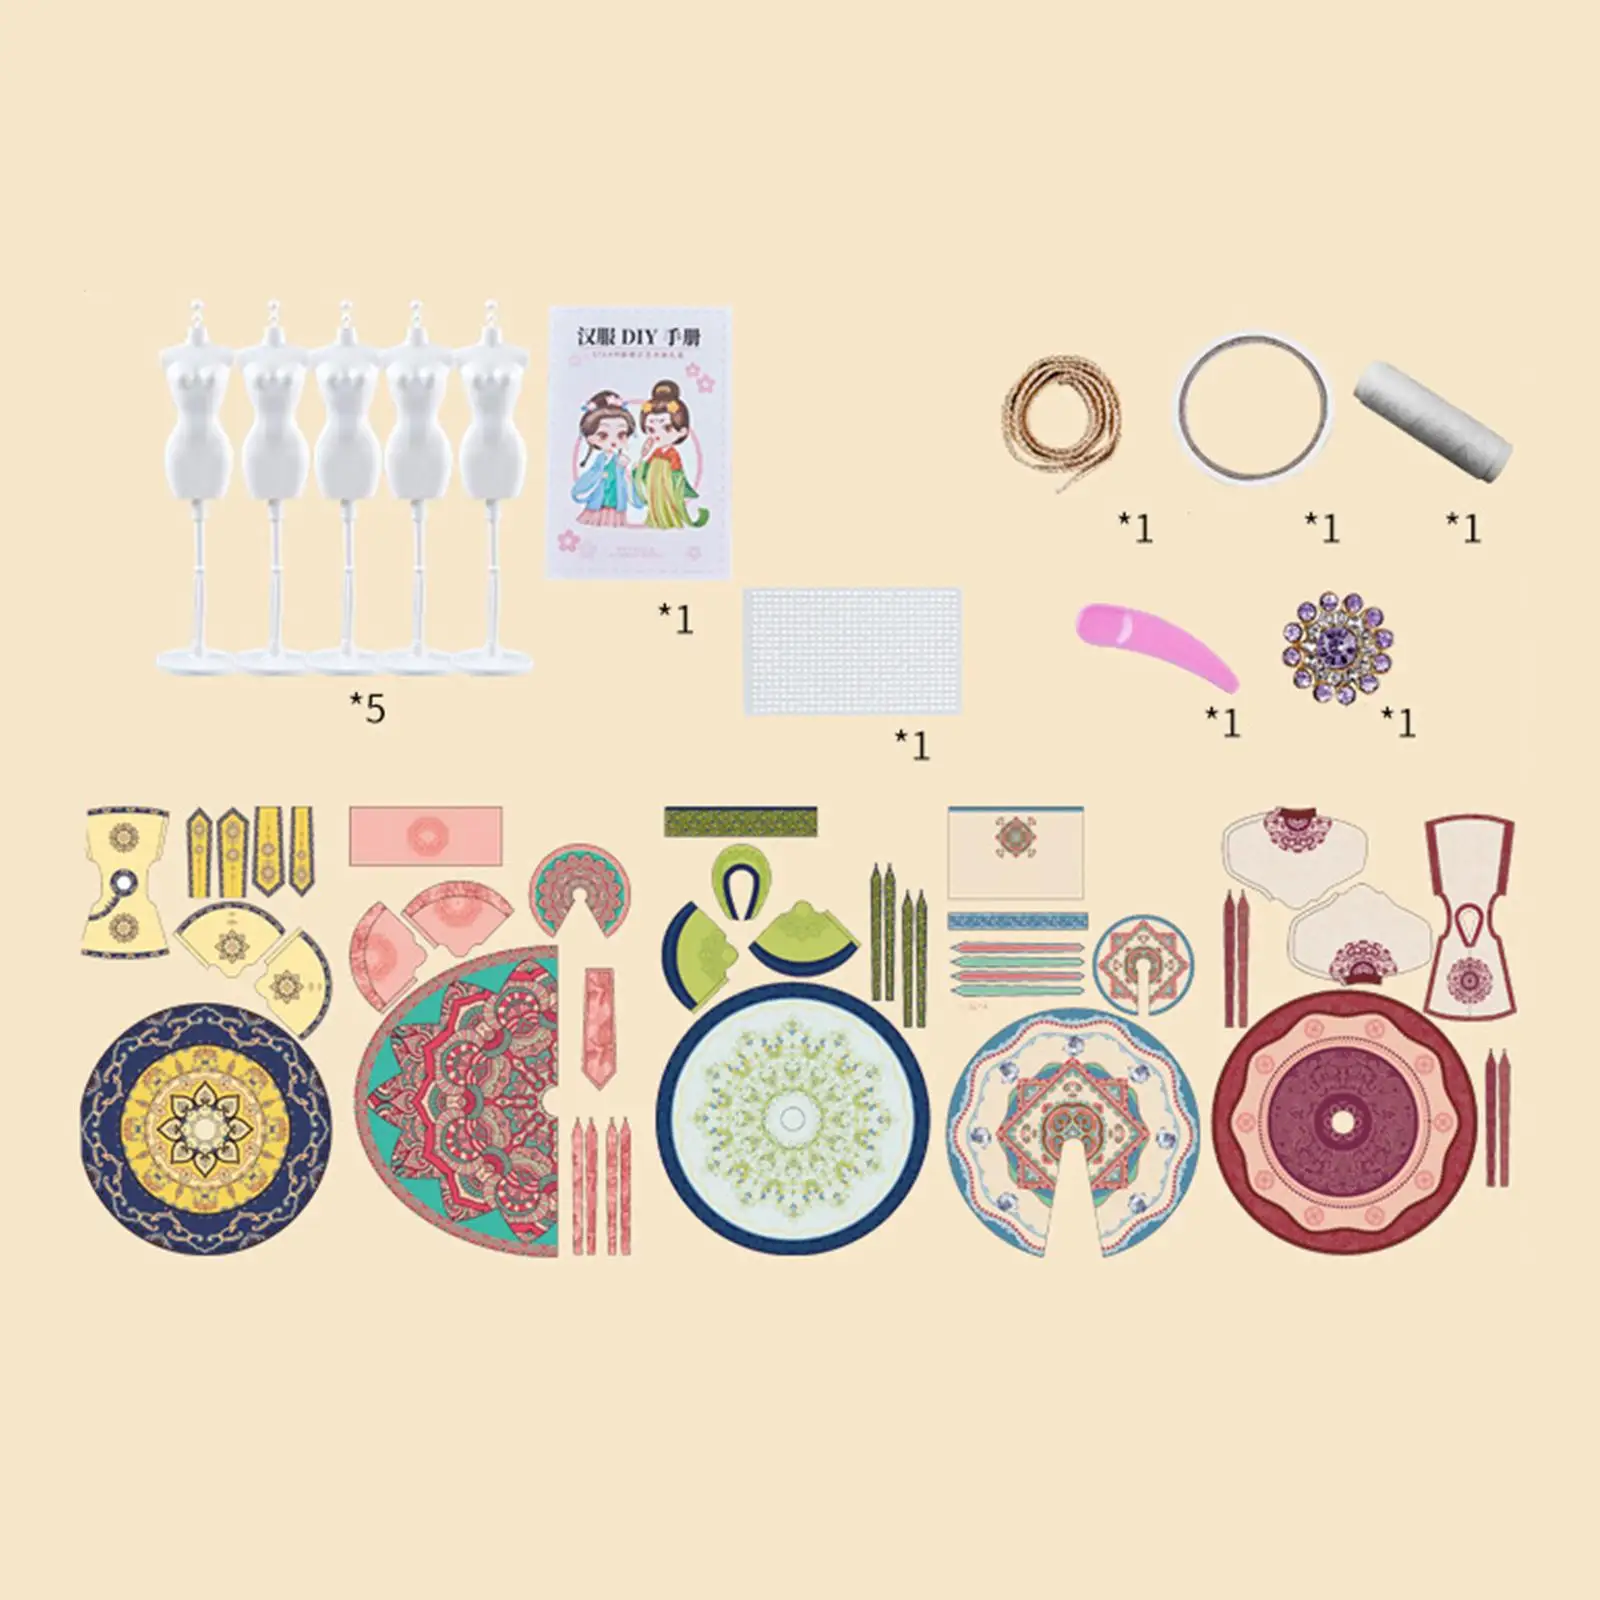 Fashion Design Crafts Kits Creativity DIY Arts and Crafts for Girls Children